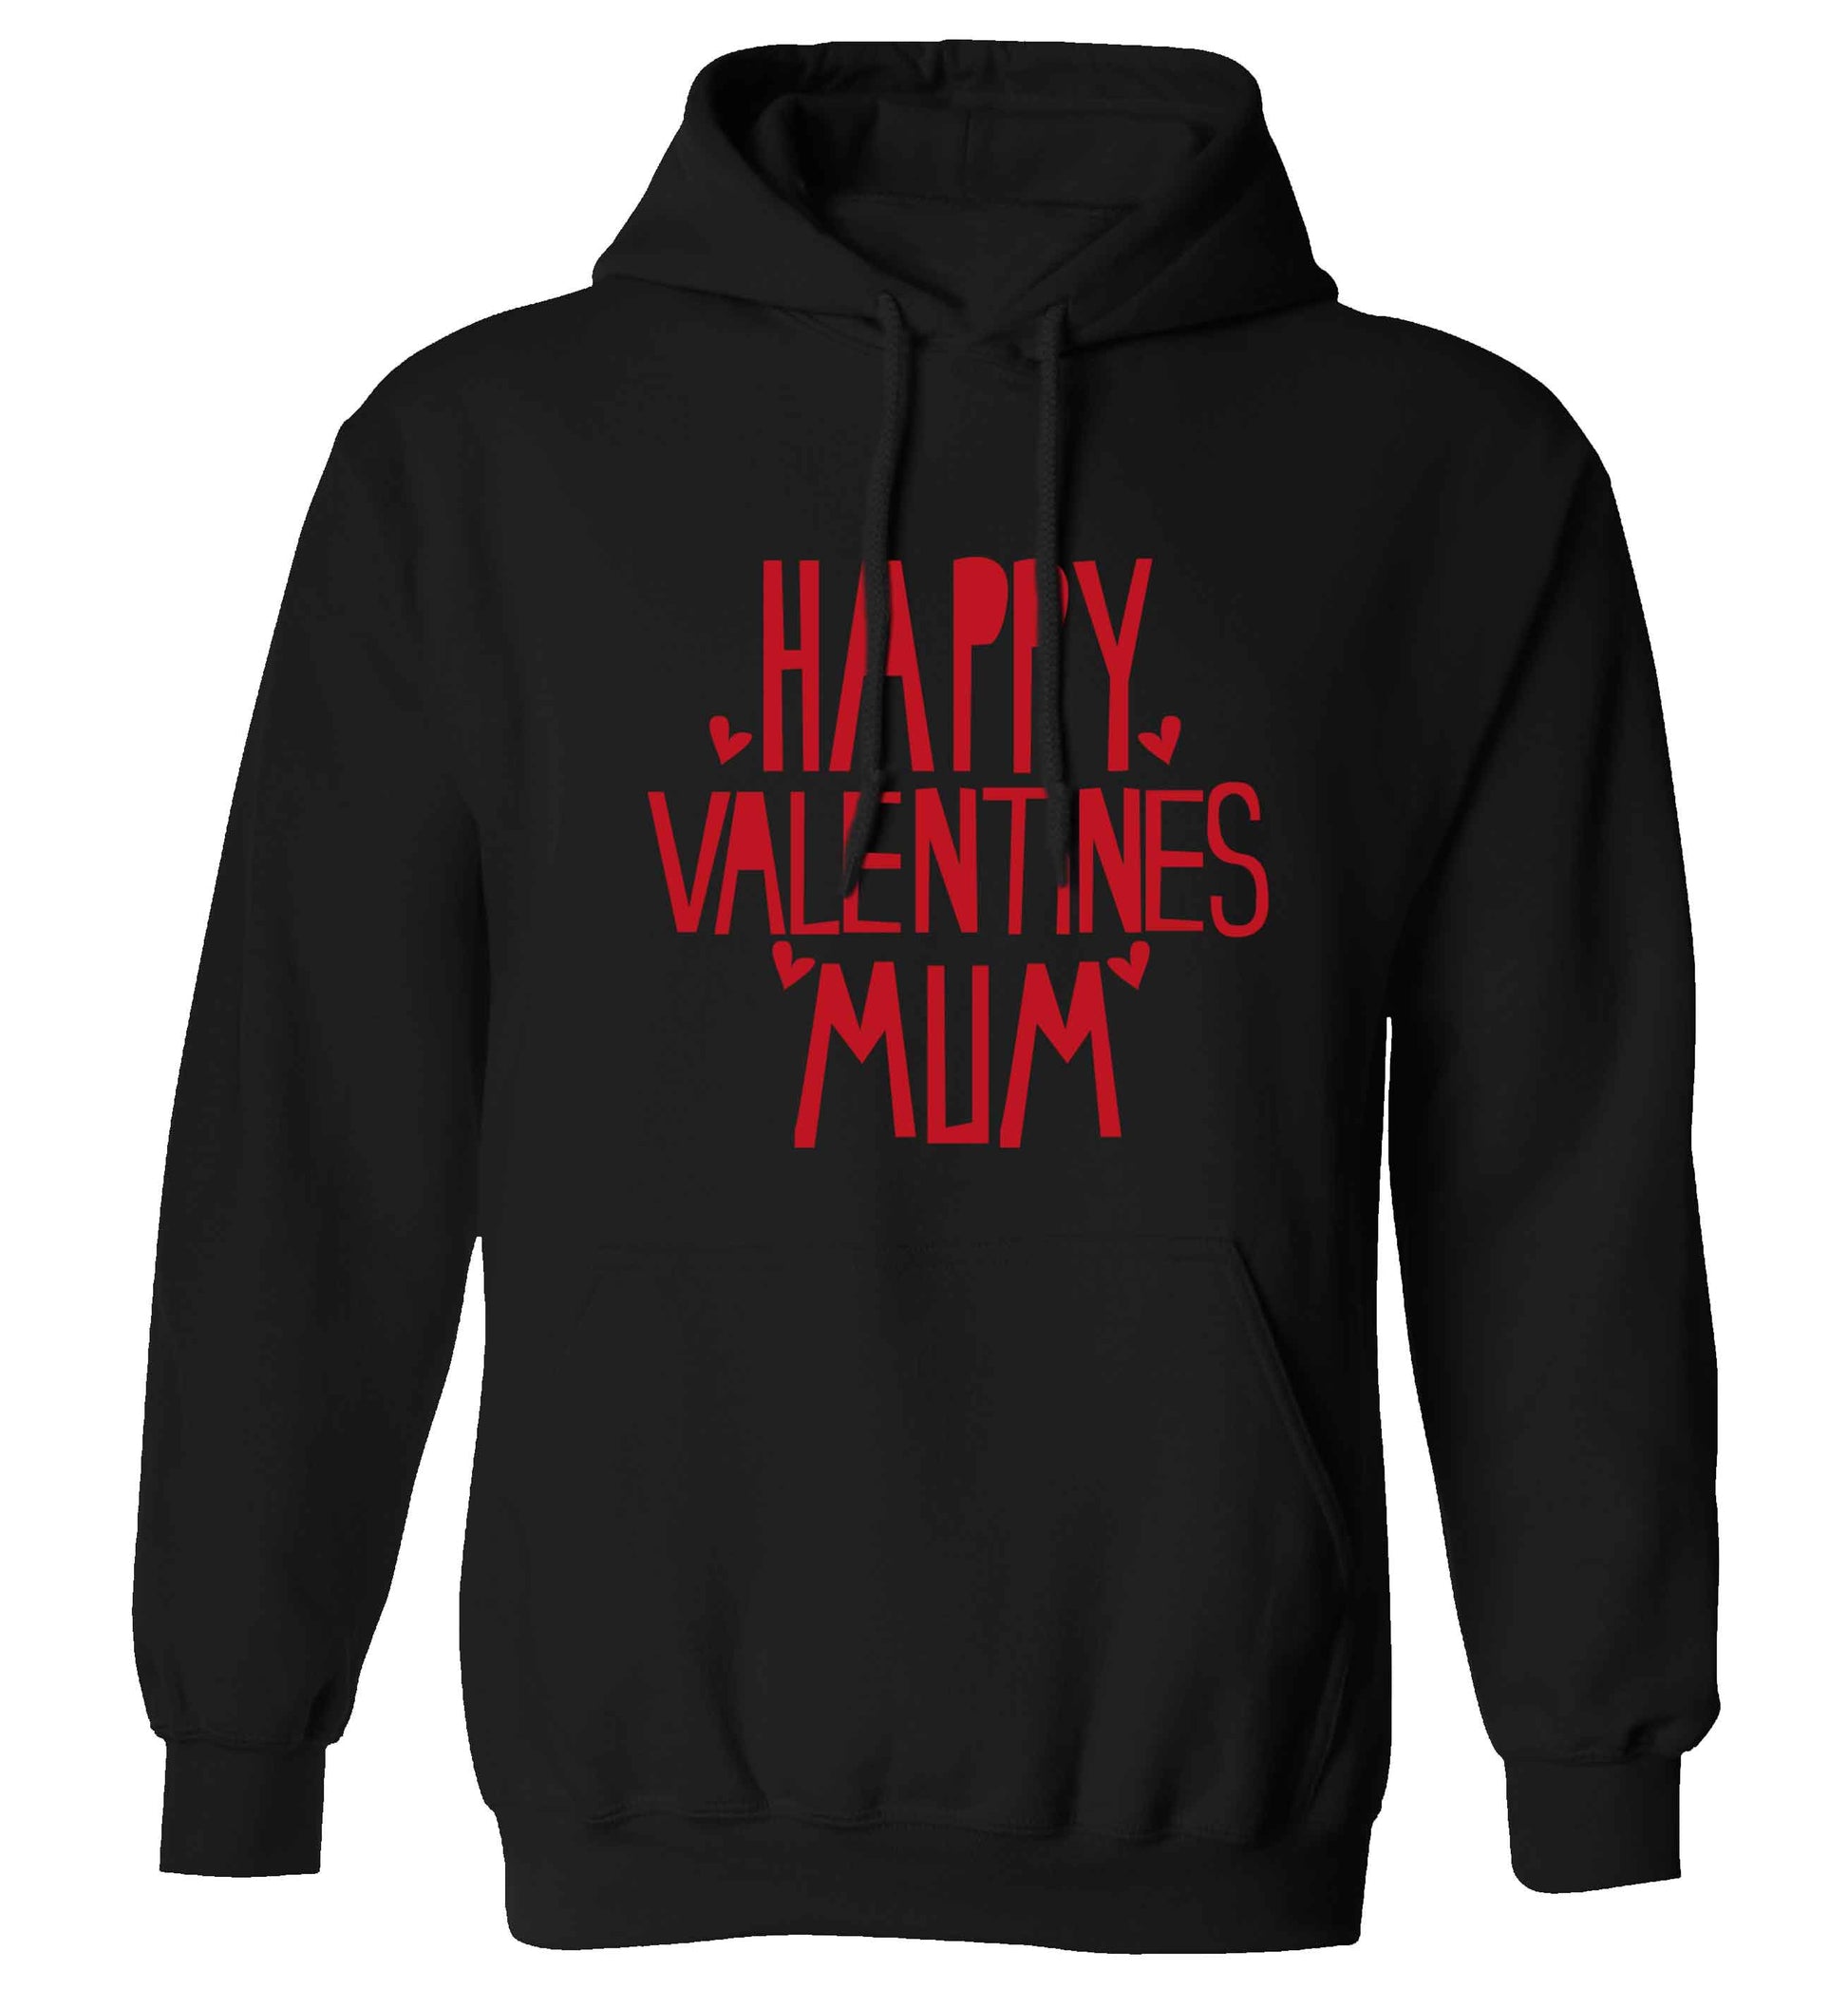 Happy valentines mum adults unisex black hoodie 2XL